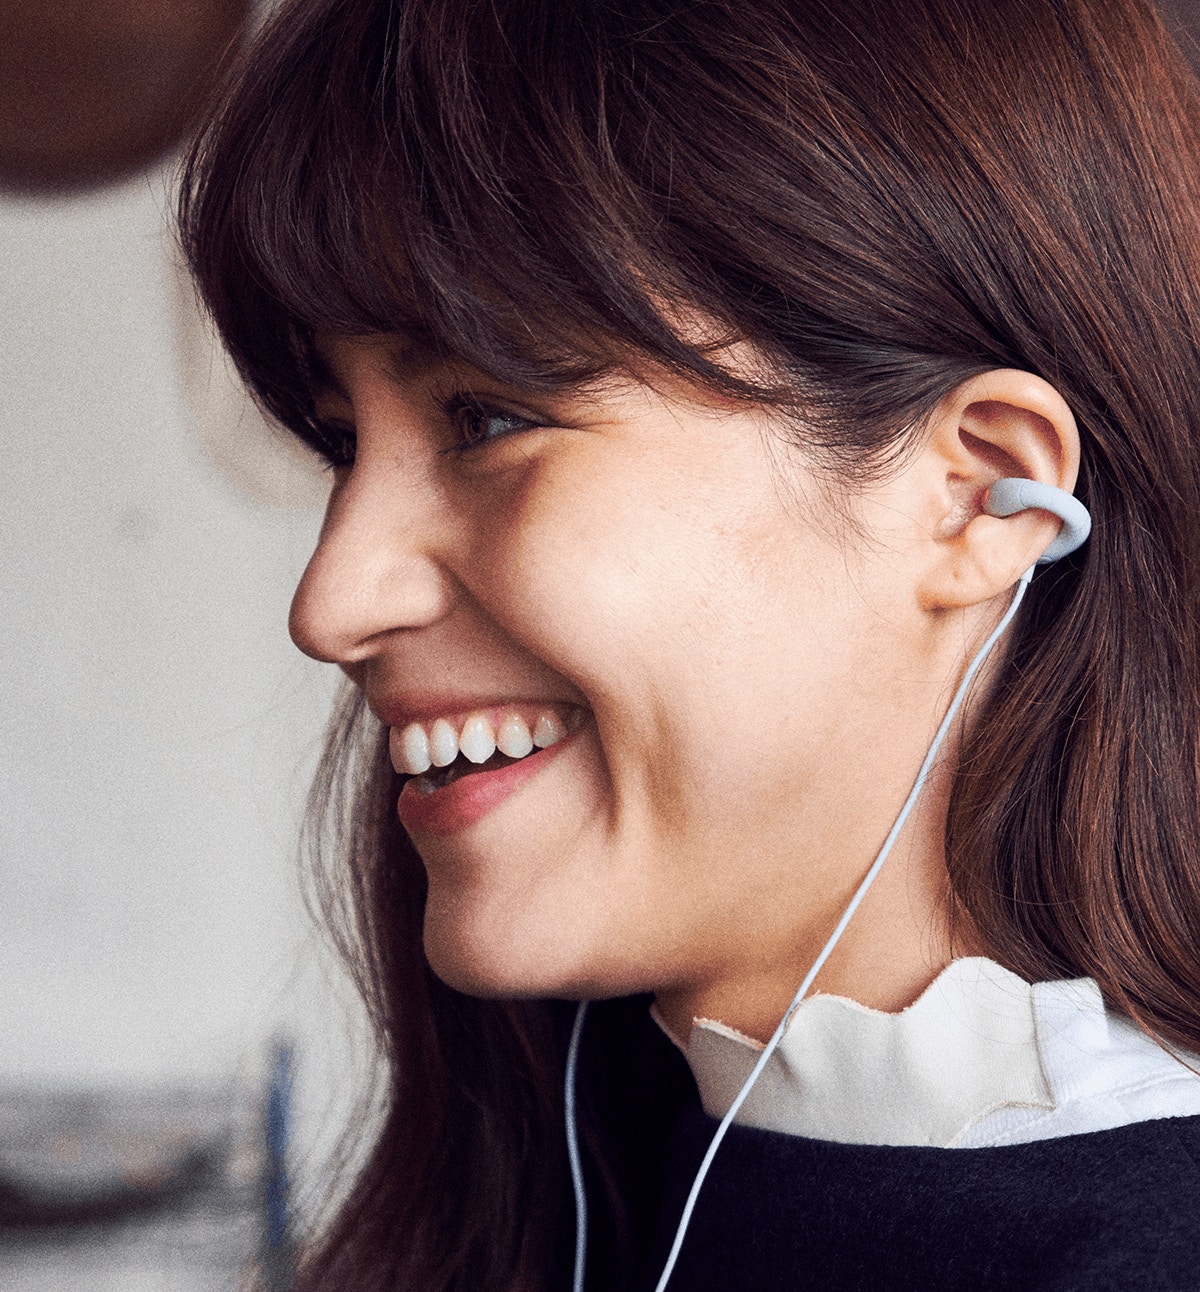 Sony新品牌ambie 耳環型earphone不漏音卻聽盡環境聲